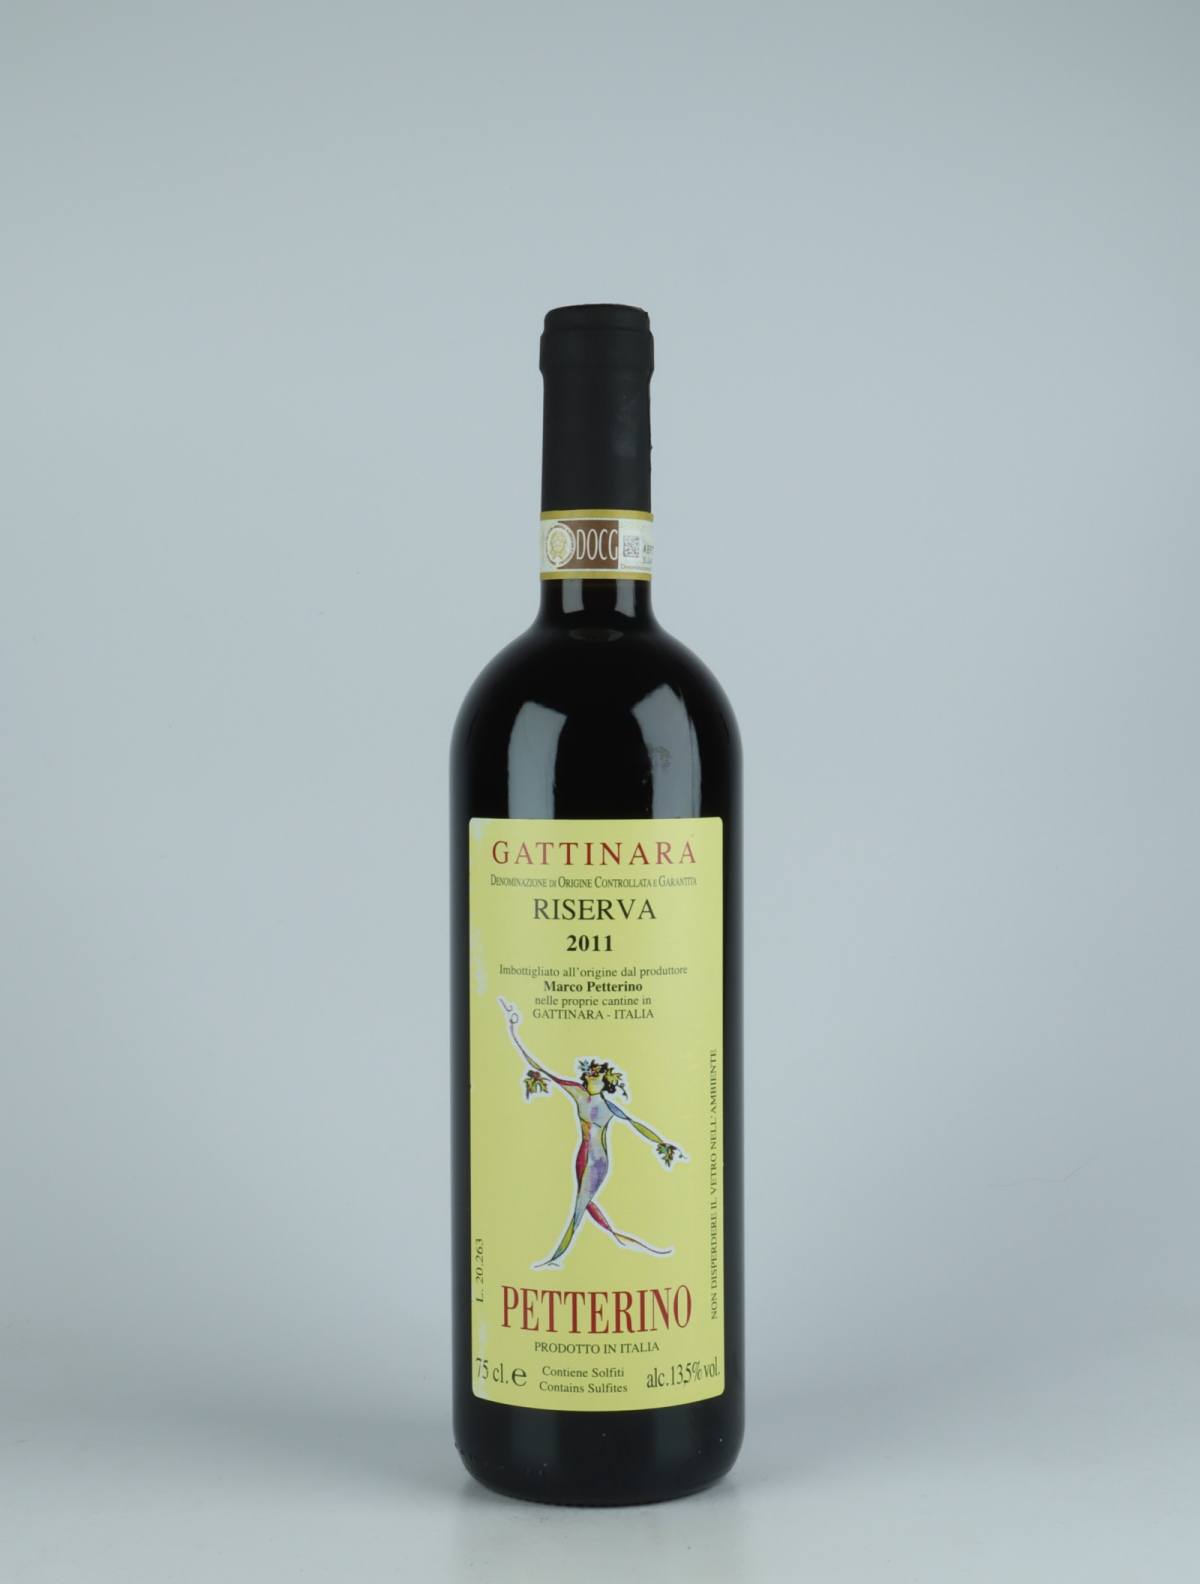 En flaske 2011 Gattinara Riserva Rødvin fra Petterino, Piemonte i Italien